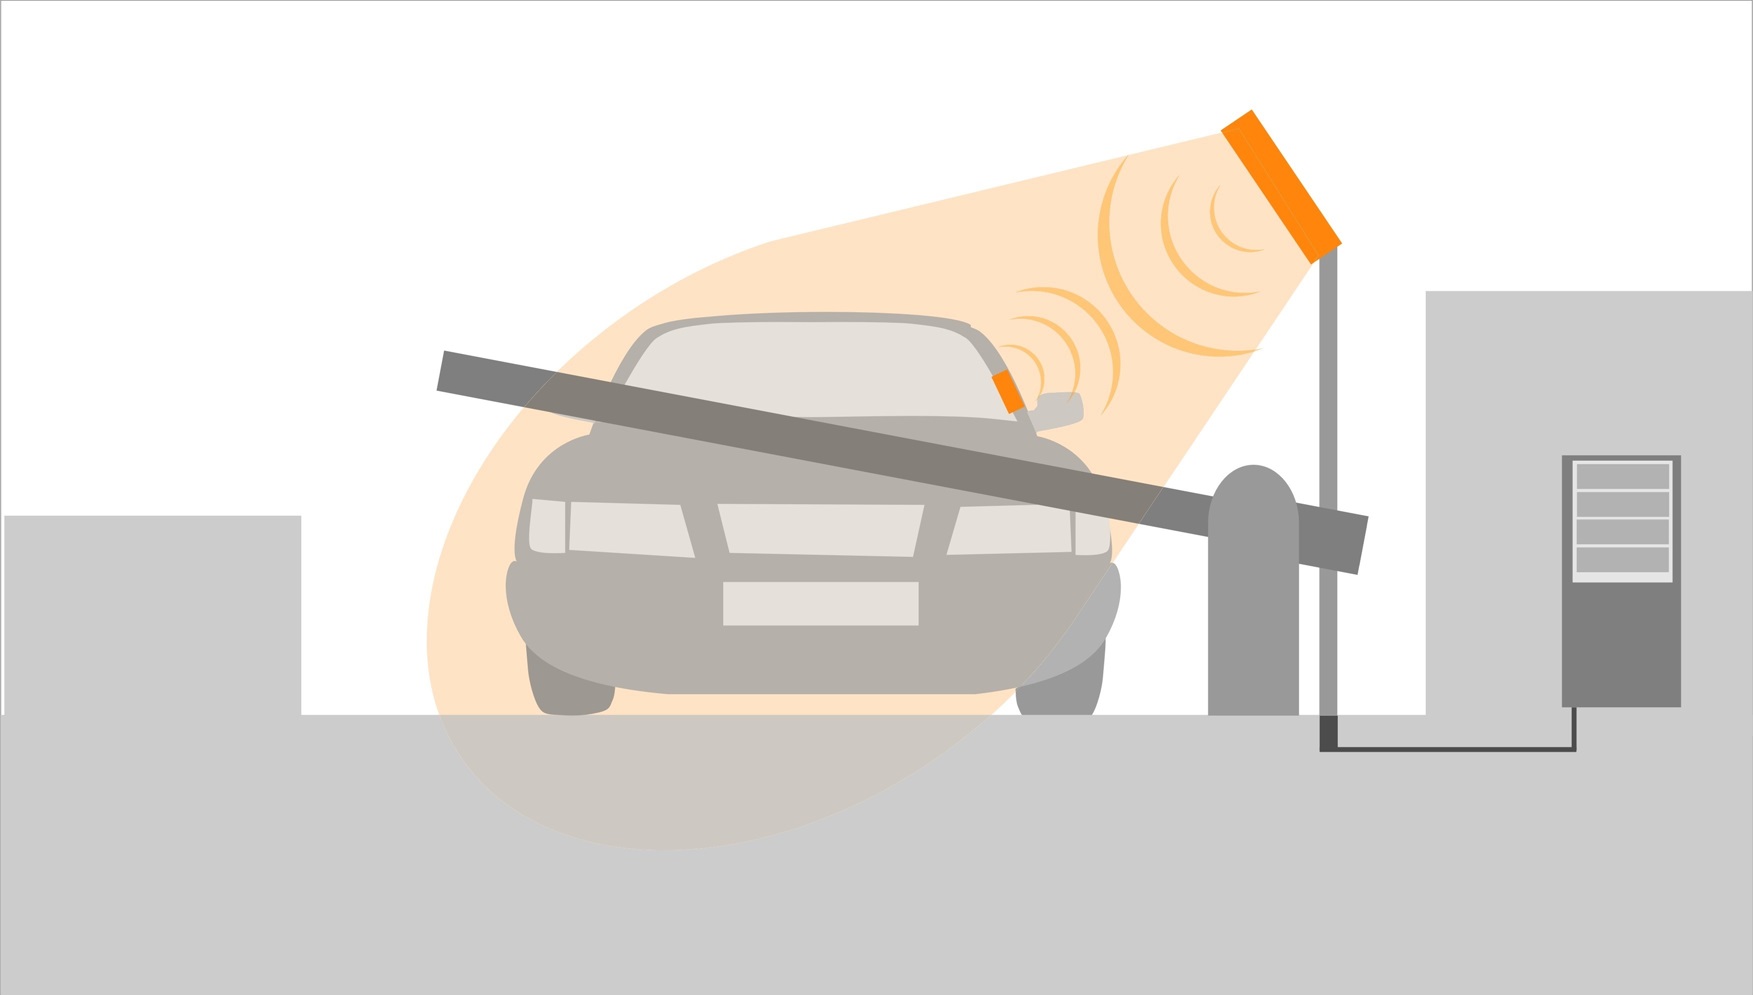 Illustration if RFID using for car identification